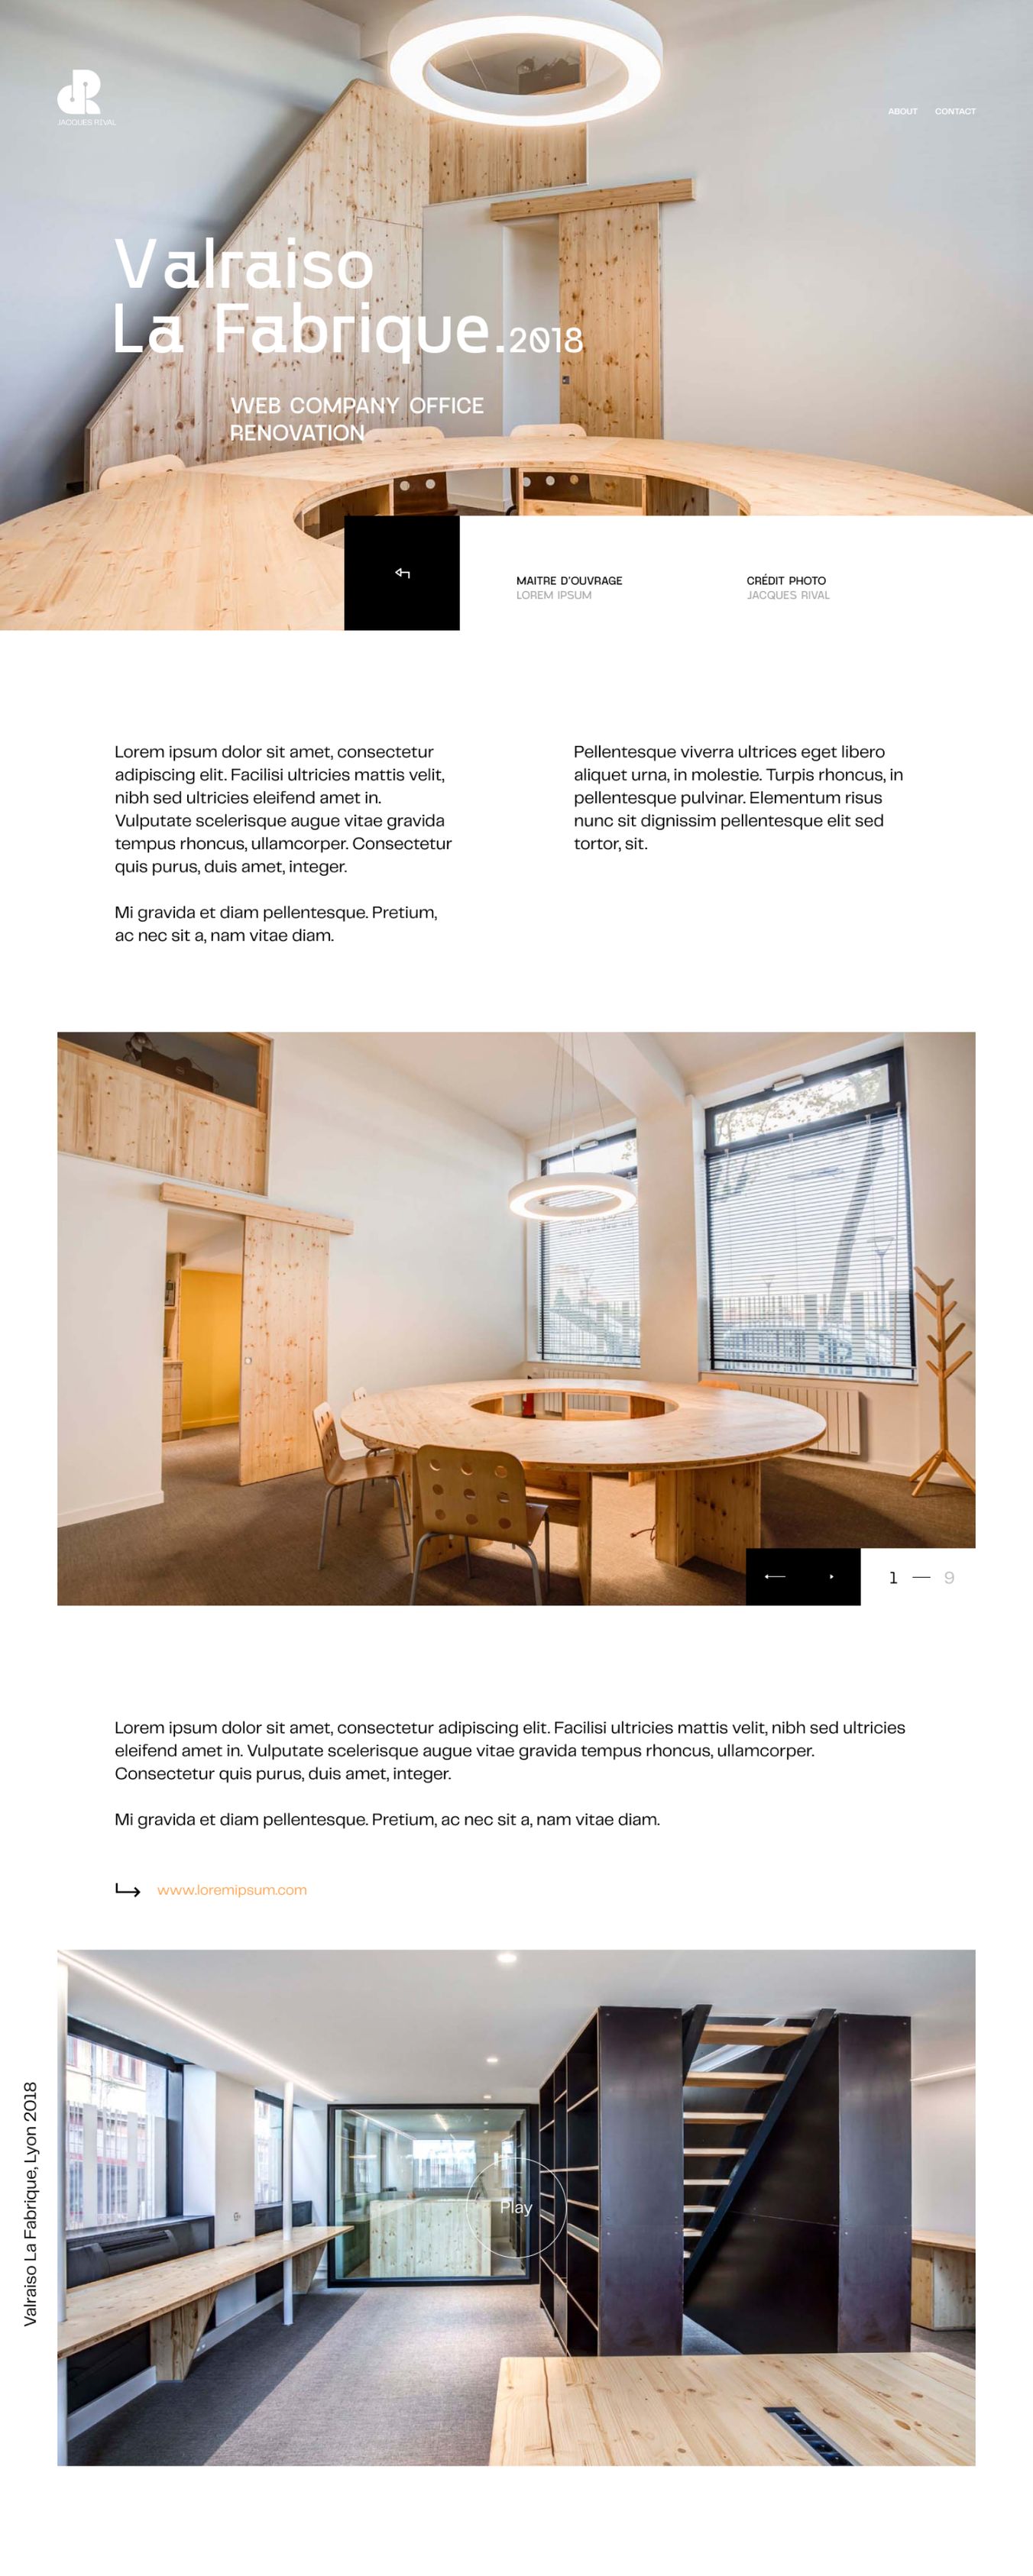 Jacques Rival - image full screen site vitrine projet blanc